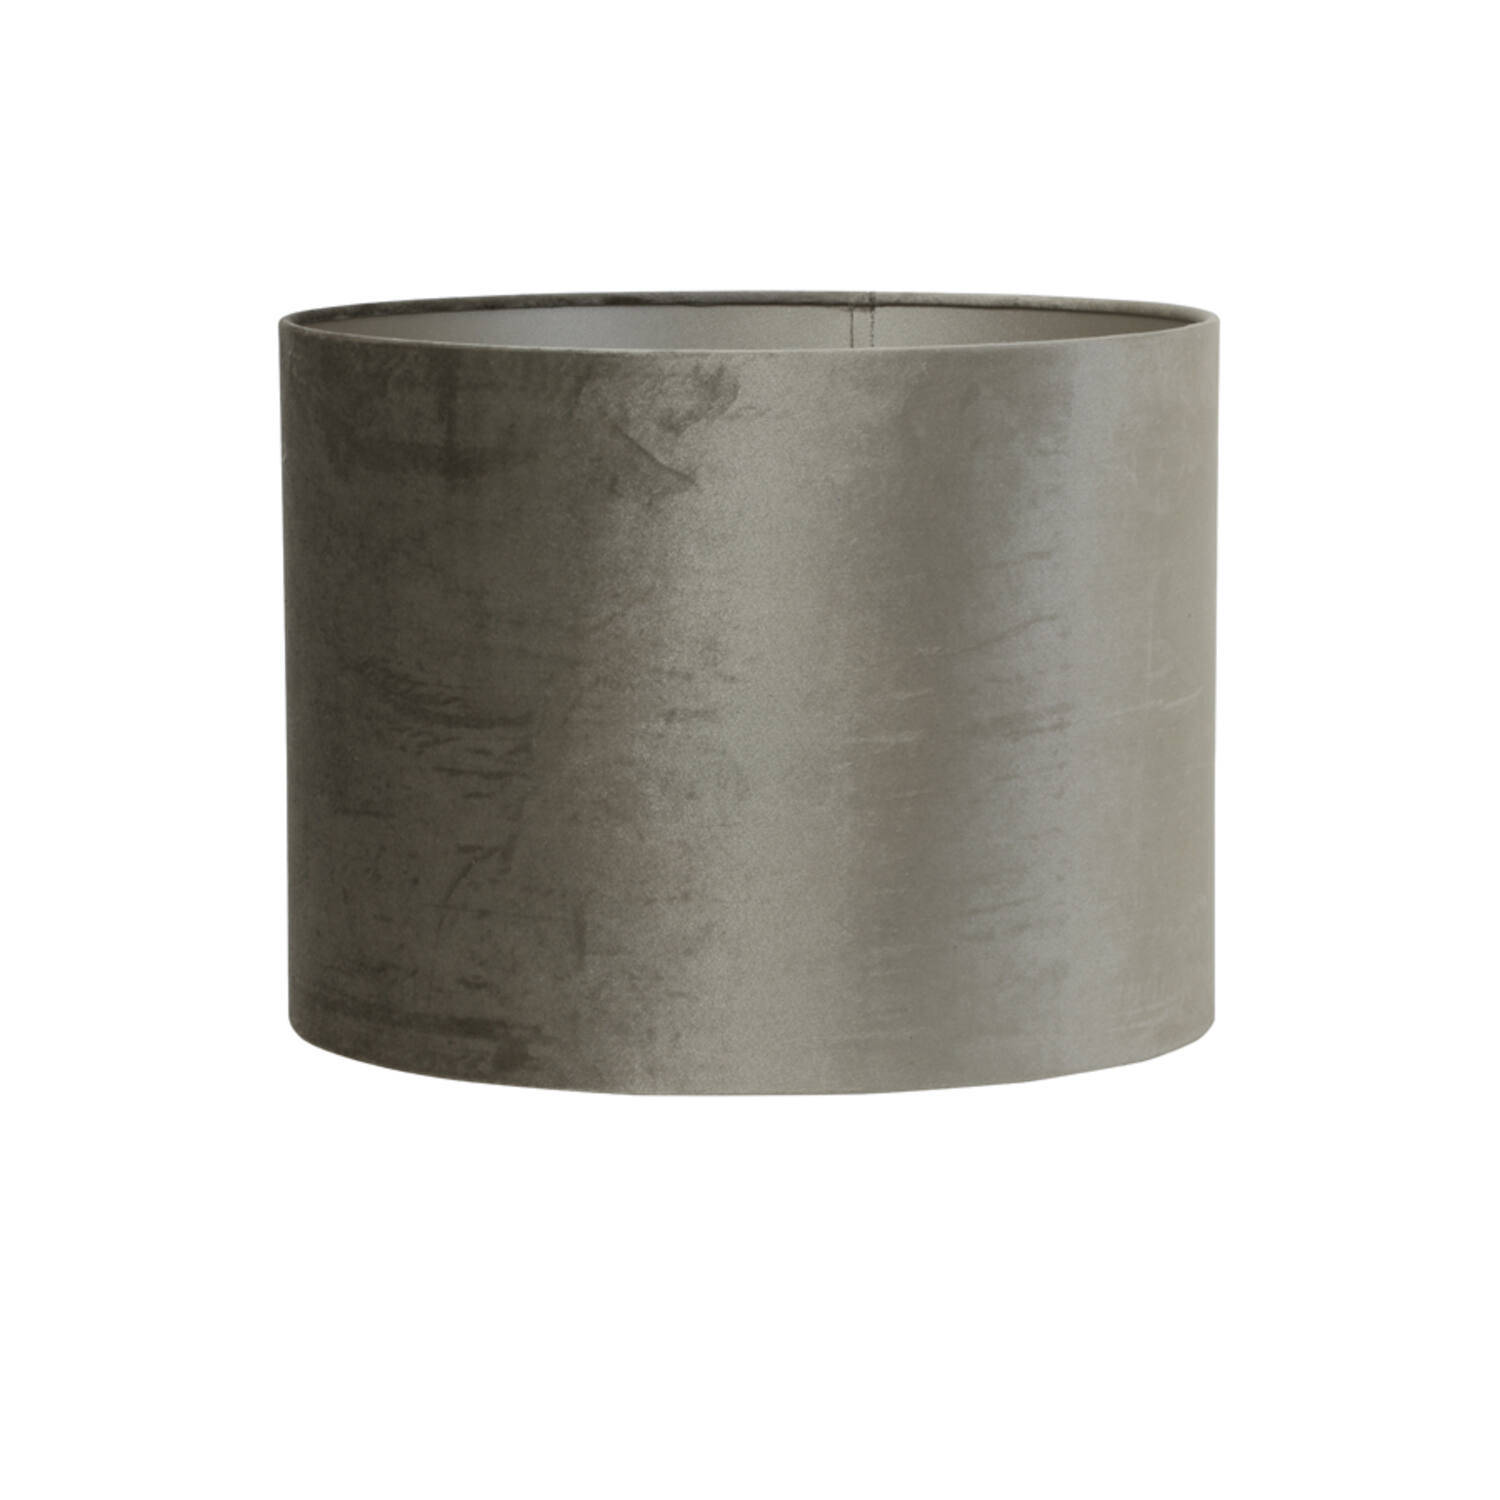 Kap cilinder 35-35-34 cm ZINC taupe Light & Living